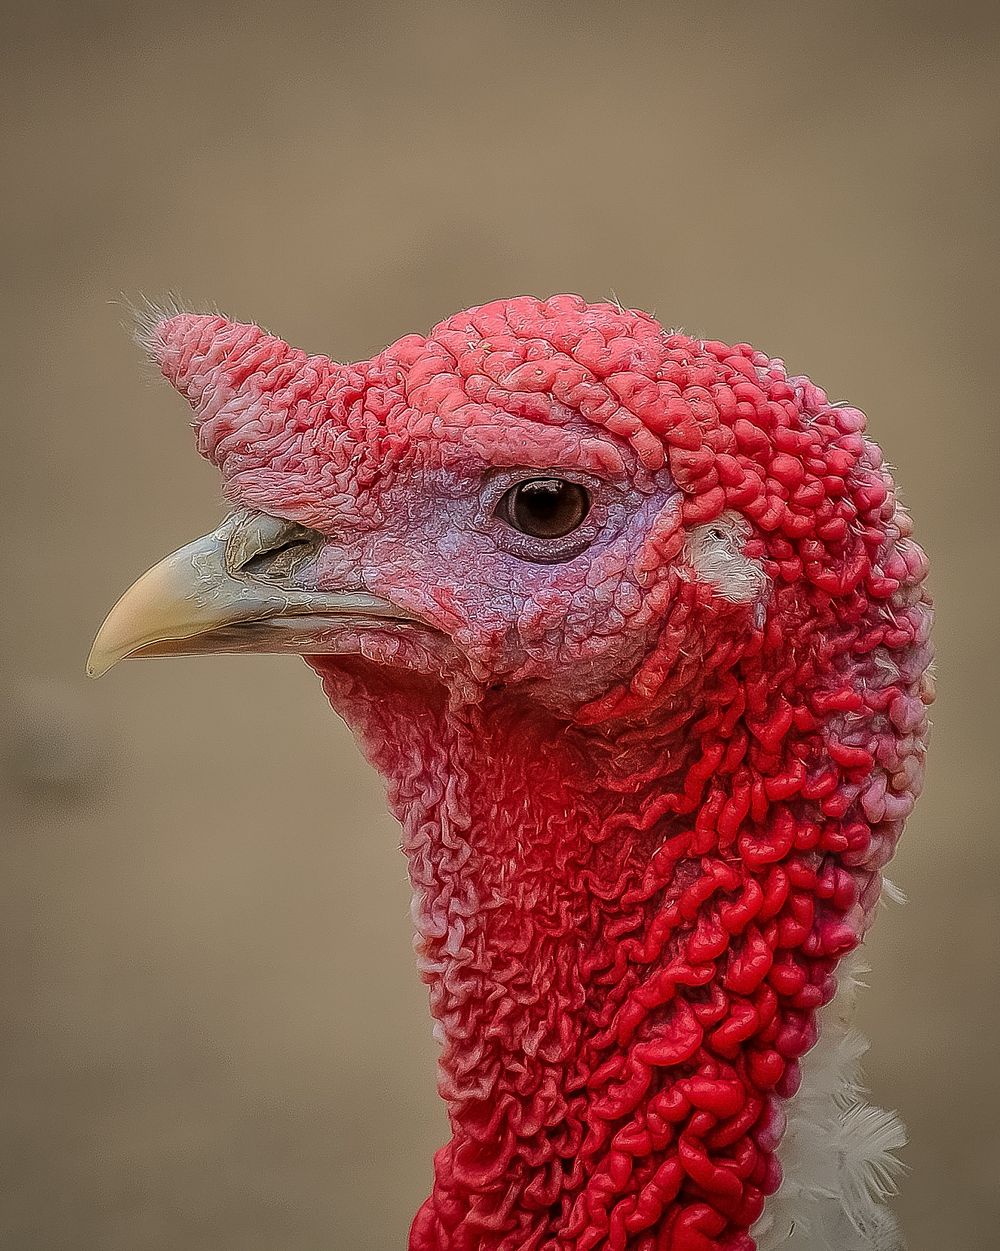 Turkey bird, animal photography. Free public domain CC0 image.